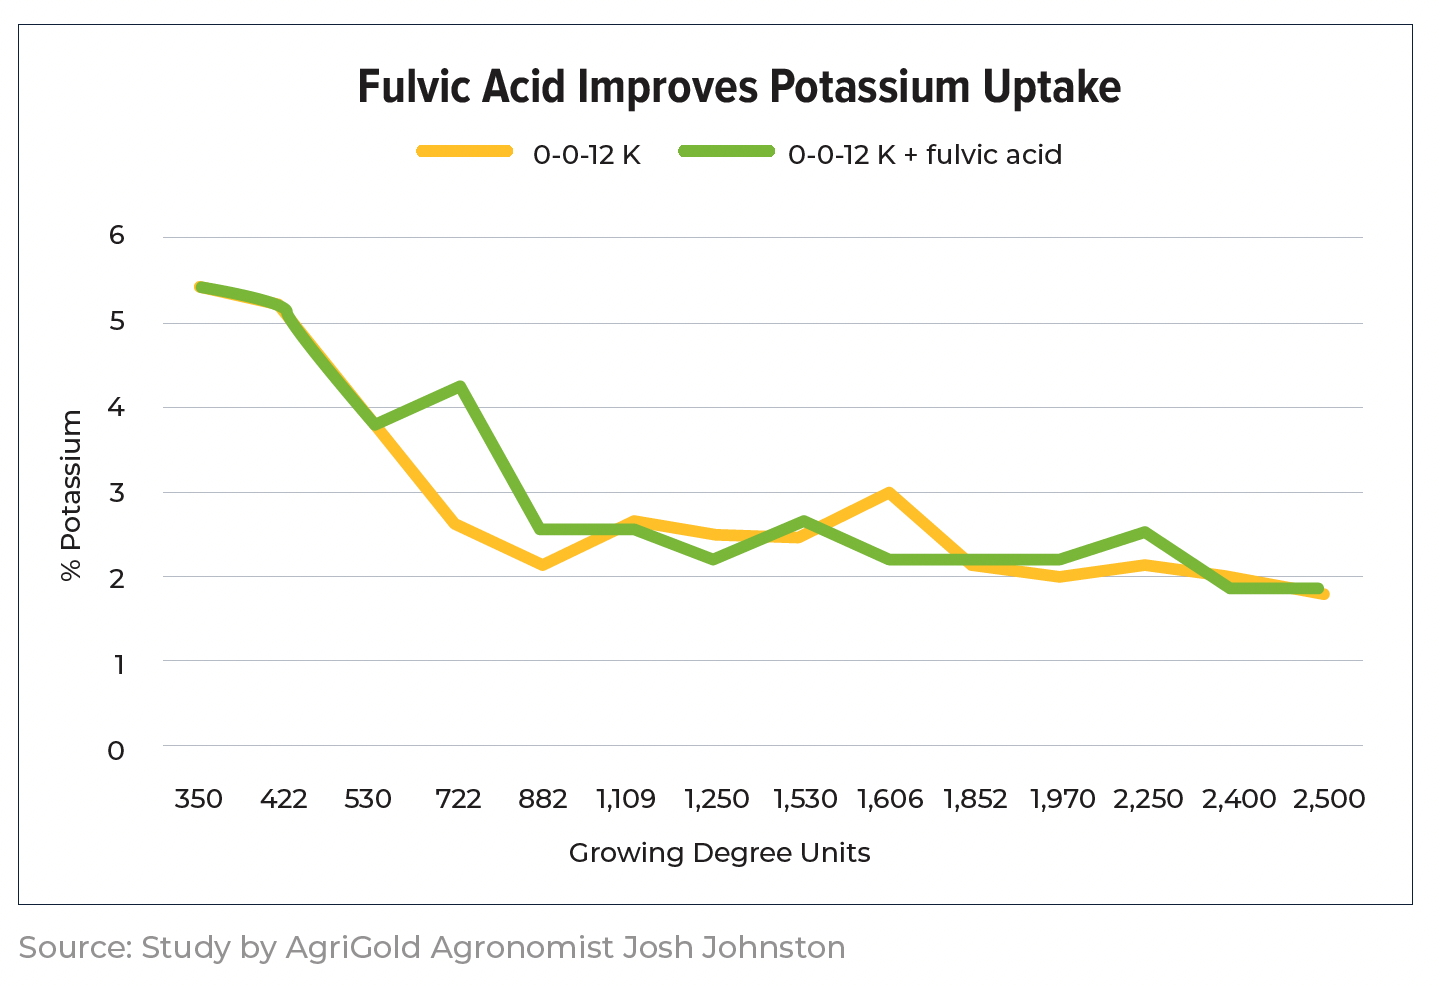 A graph showing how fulvic acid improves potassium uptake